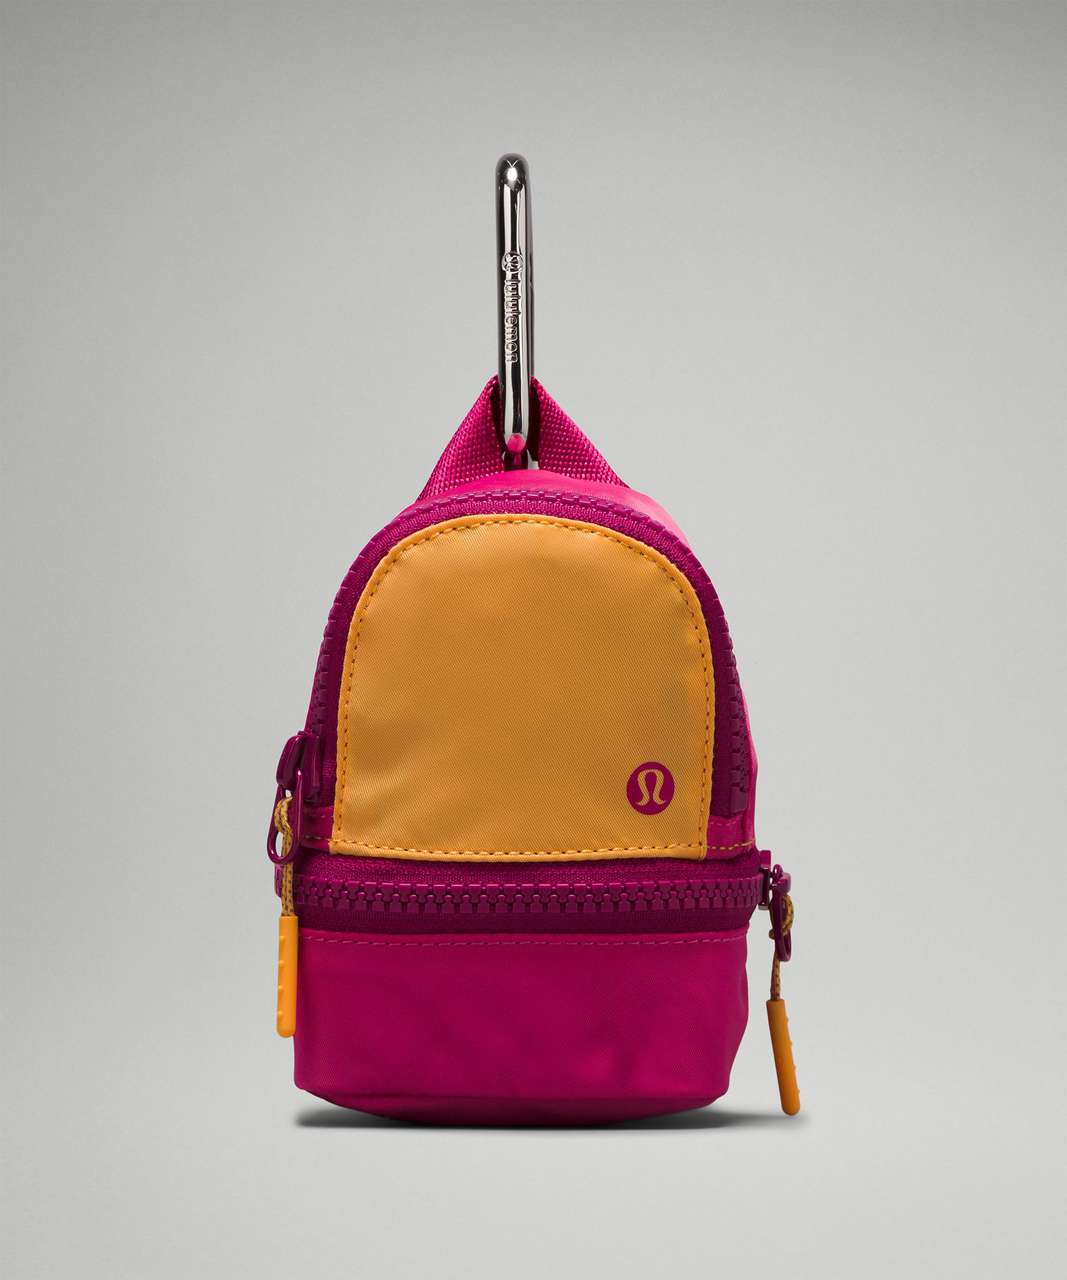 Lululemon City Adventurer Backpack *Nano - Mango Dream / Raspberry Coulis / Wild Berry